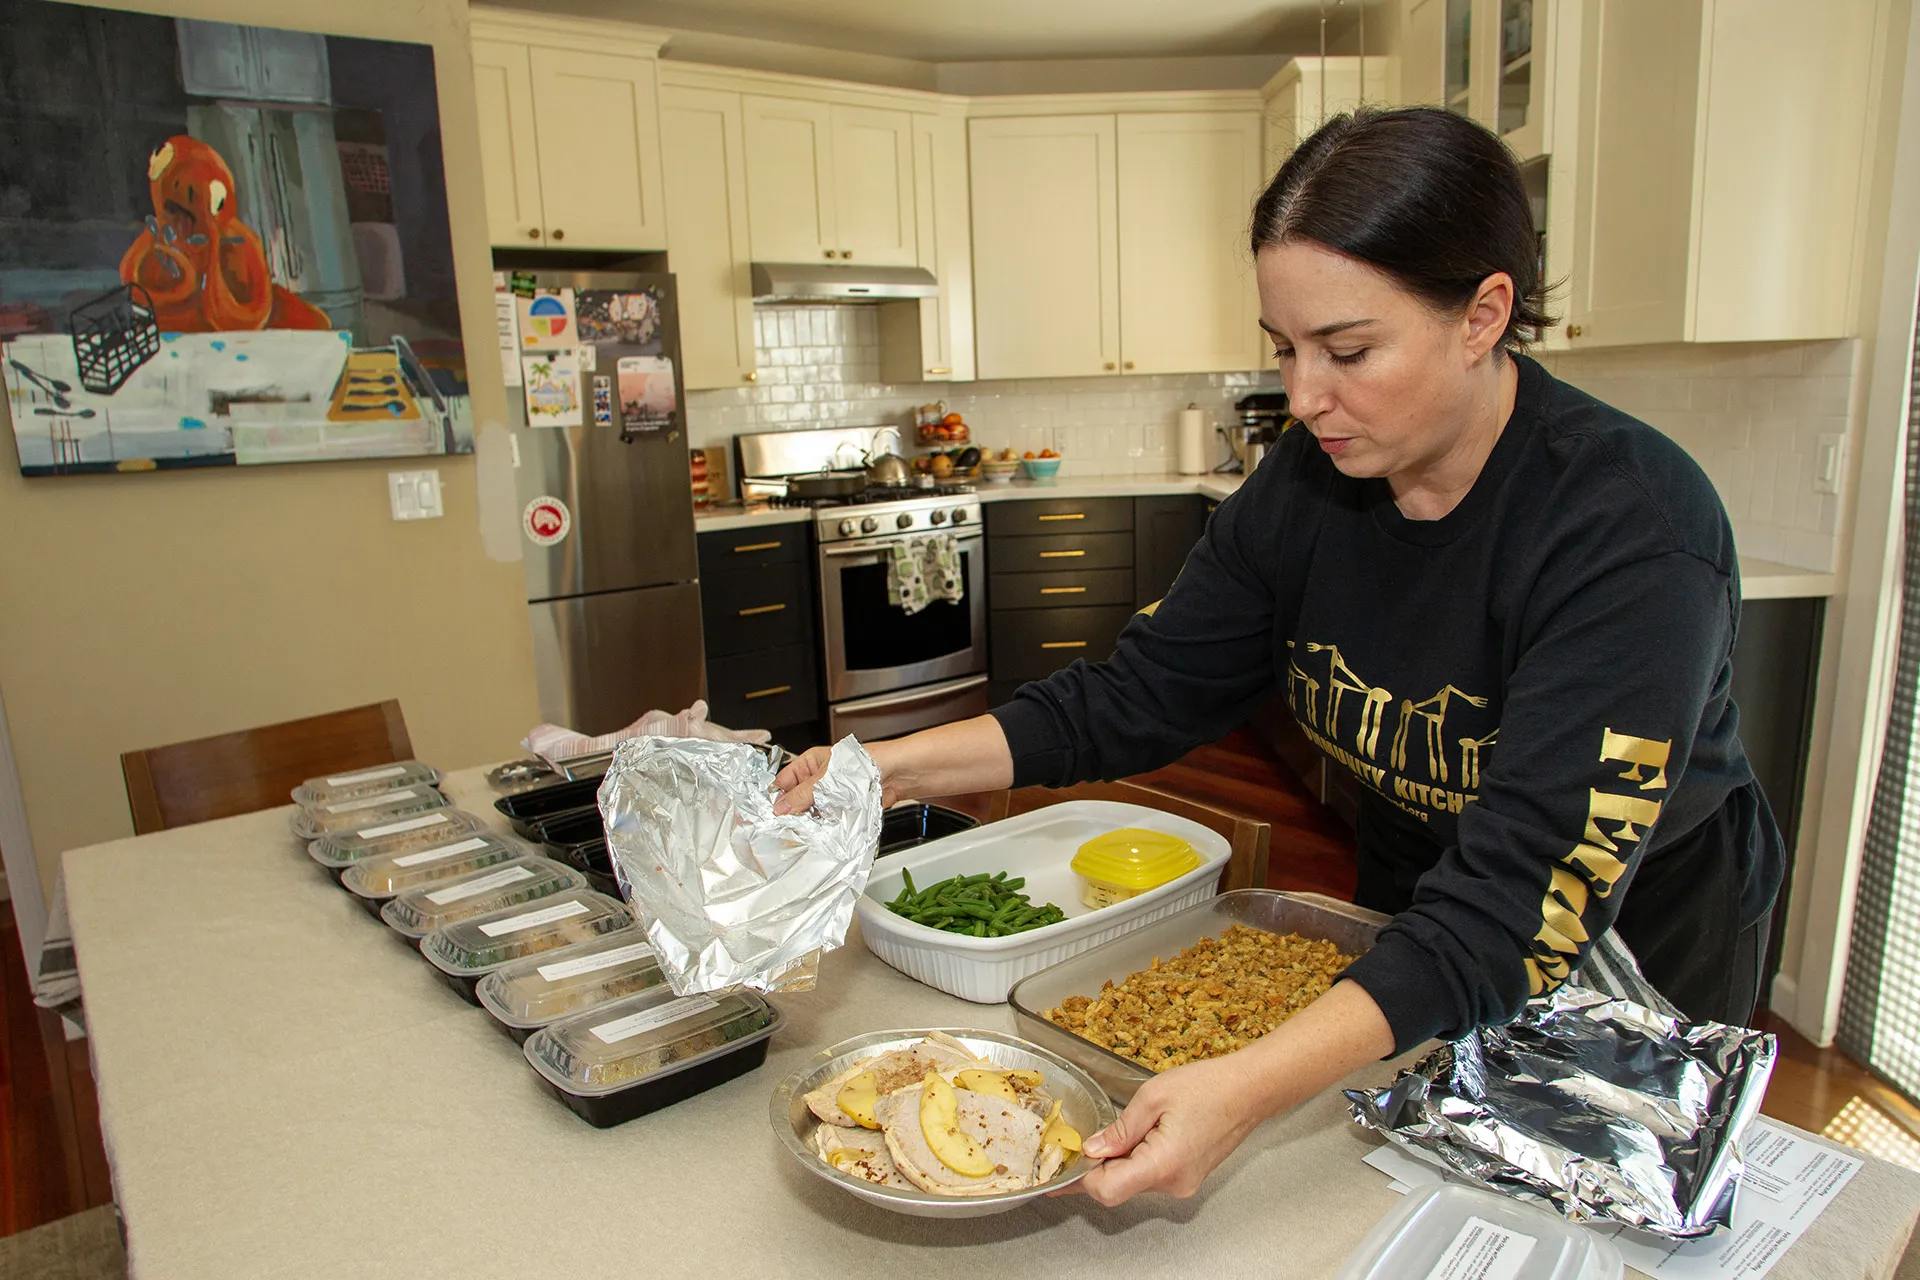 Woman preparing meals in community kitchen